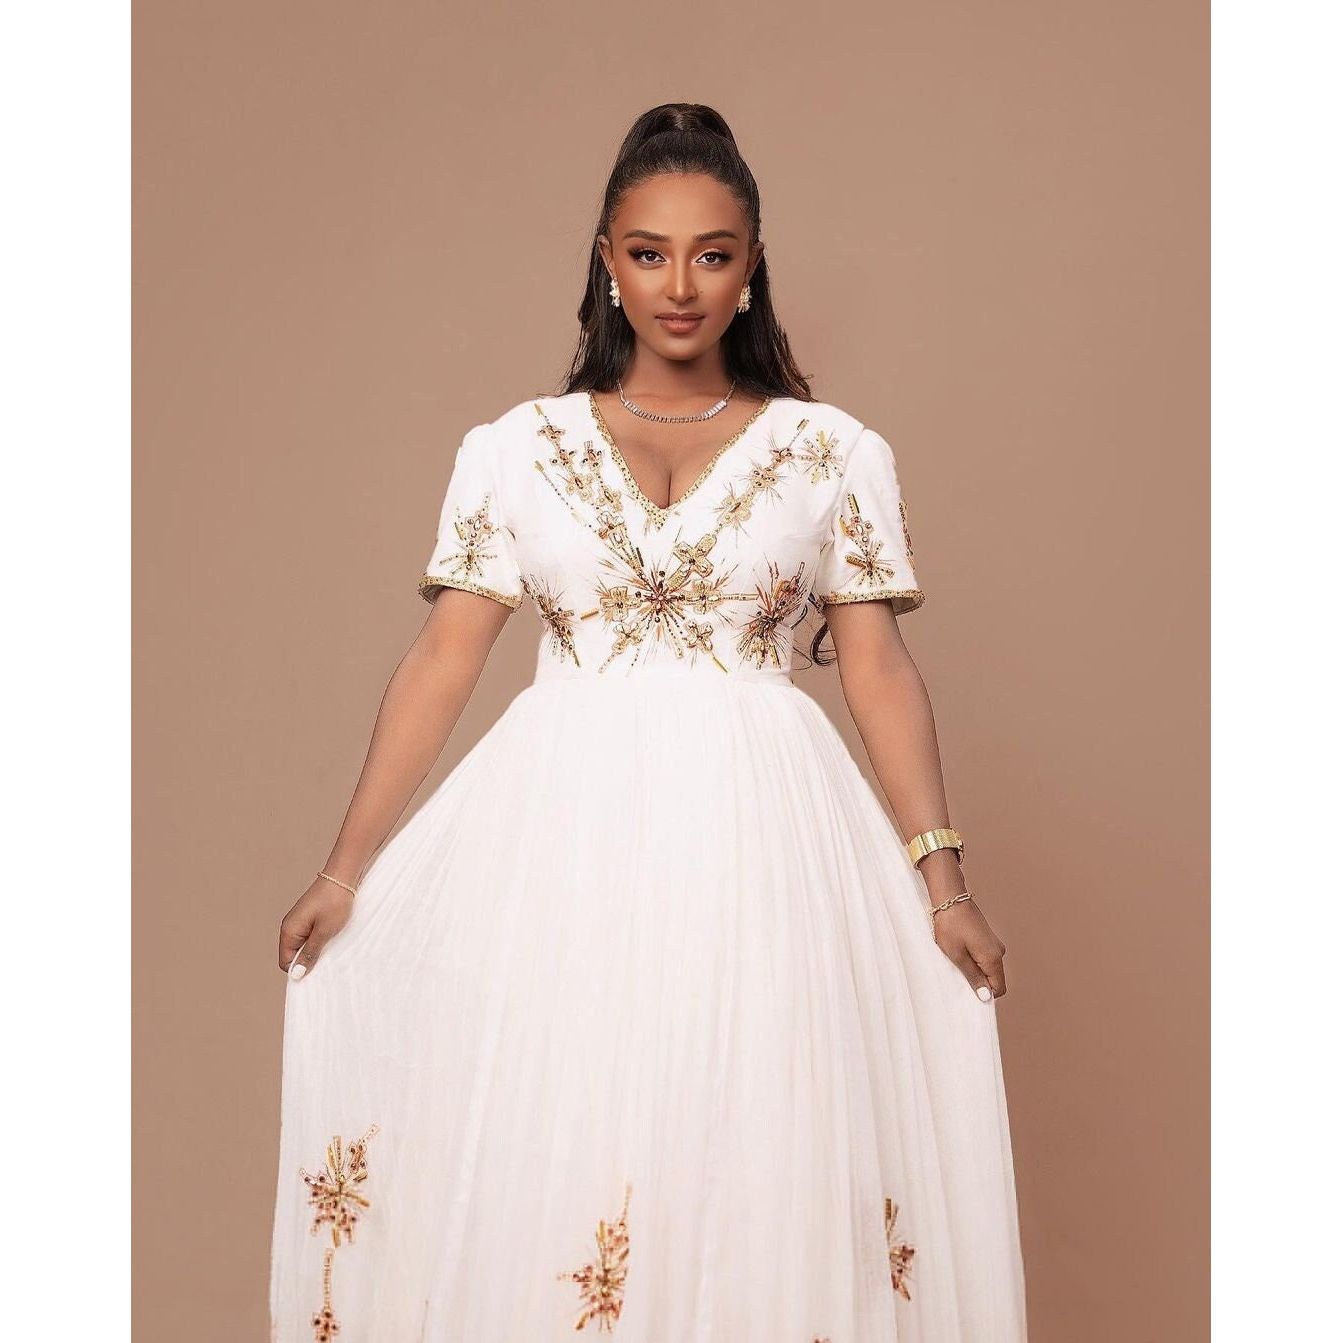 A Habesha Dress of Menen Fabric, Shimena Bottom, and White and Golden Tilf Design with Beadwork, Habesha Kemis, Eritrean dress, ሀበሻ